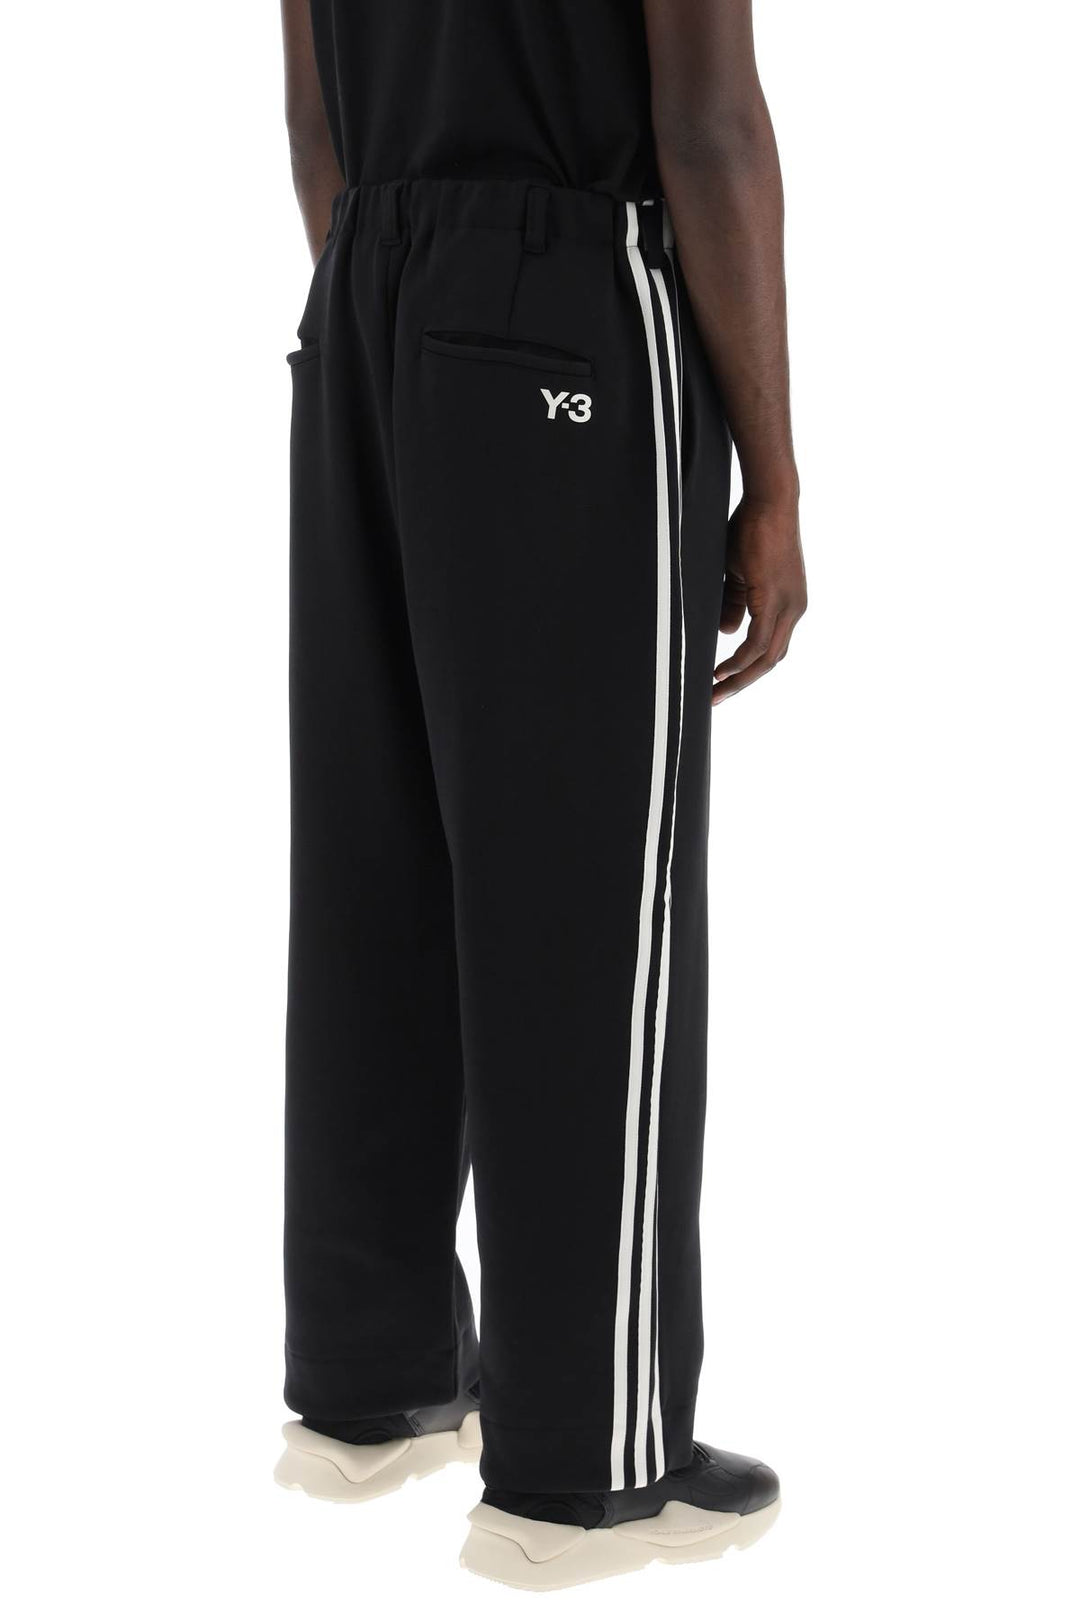 Pantaloni Jogger 3 Stripes - Y-3 - Uomo